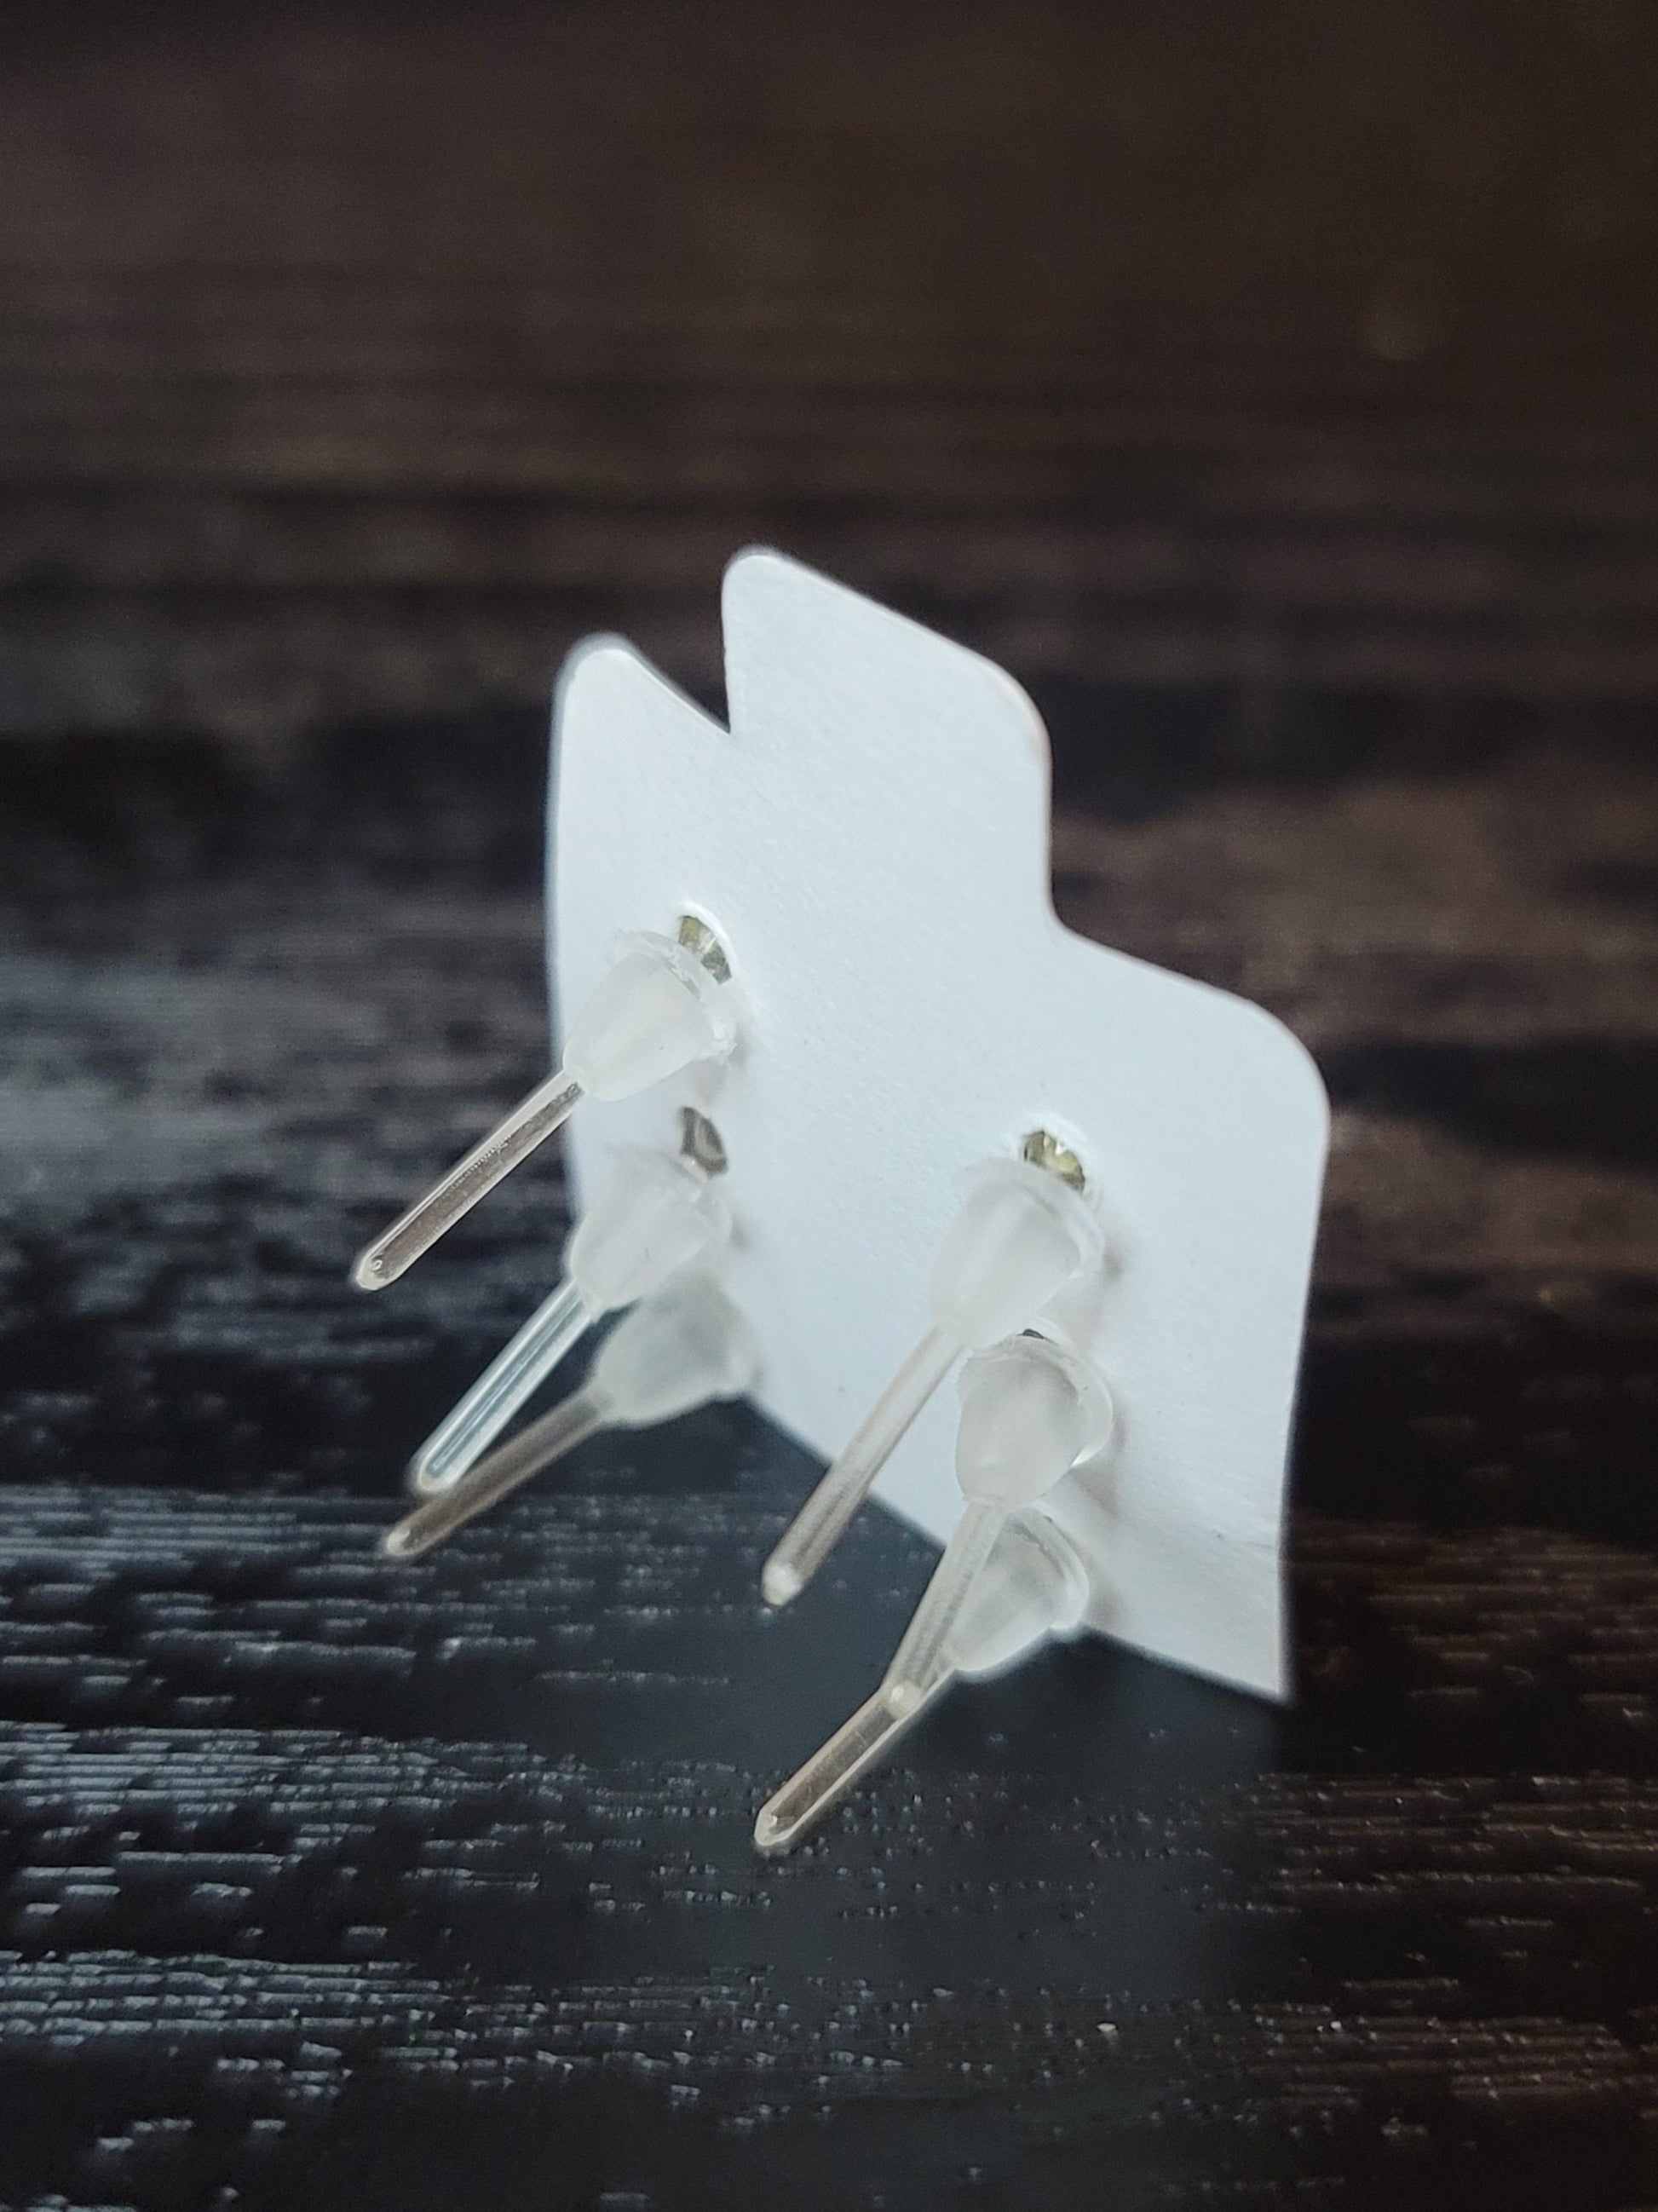 Hypoallergenic Rhinestone tiny post stud earrings plastic post 3 pairs